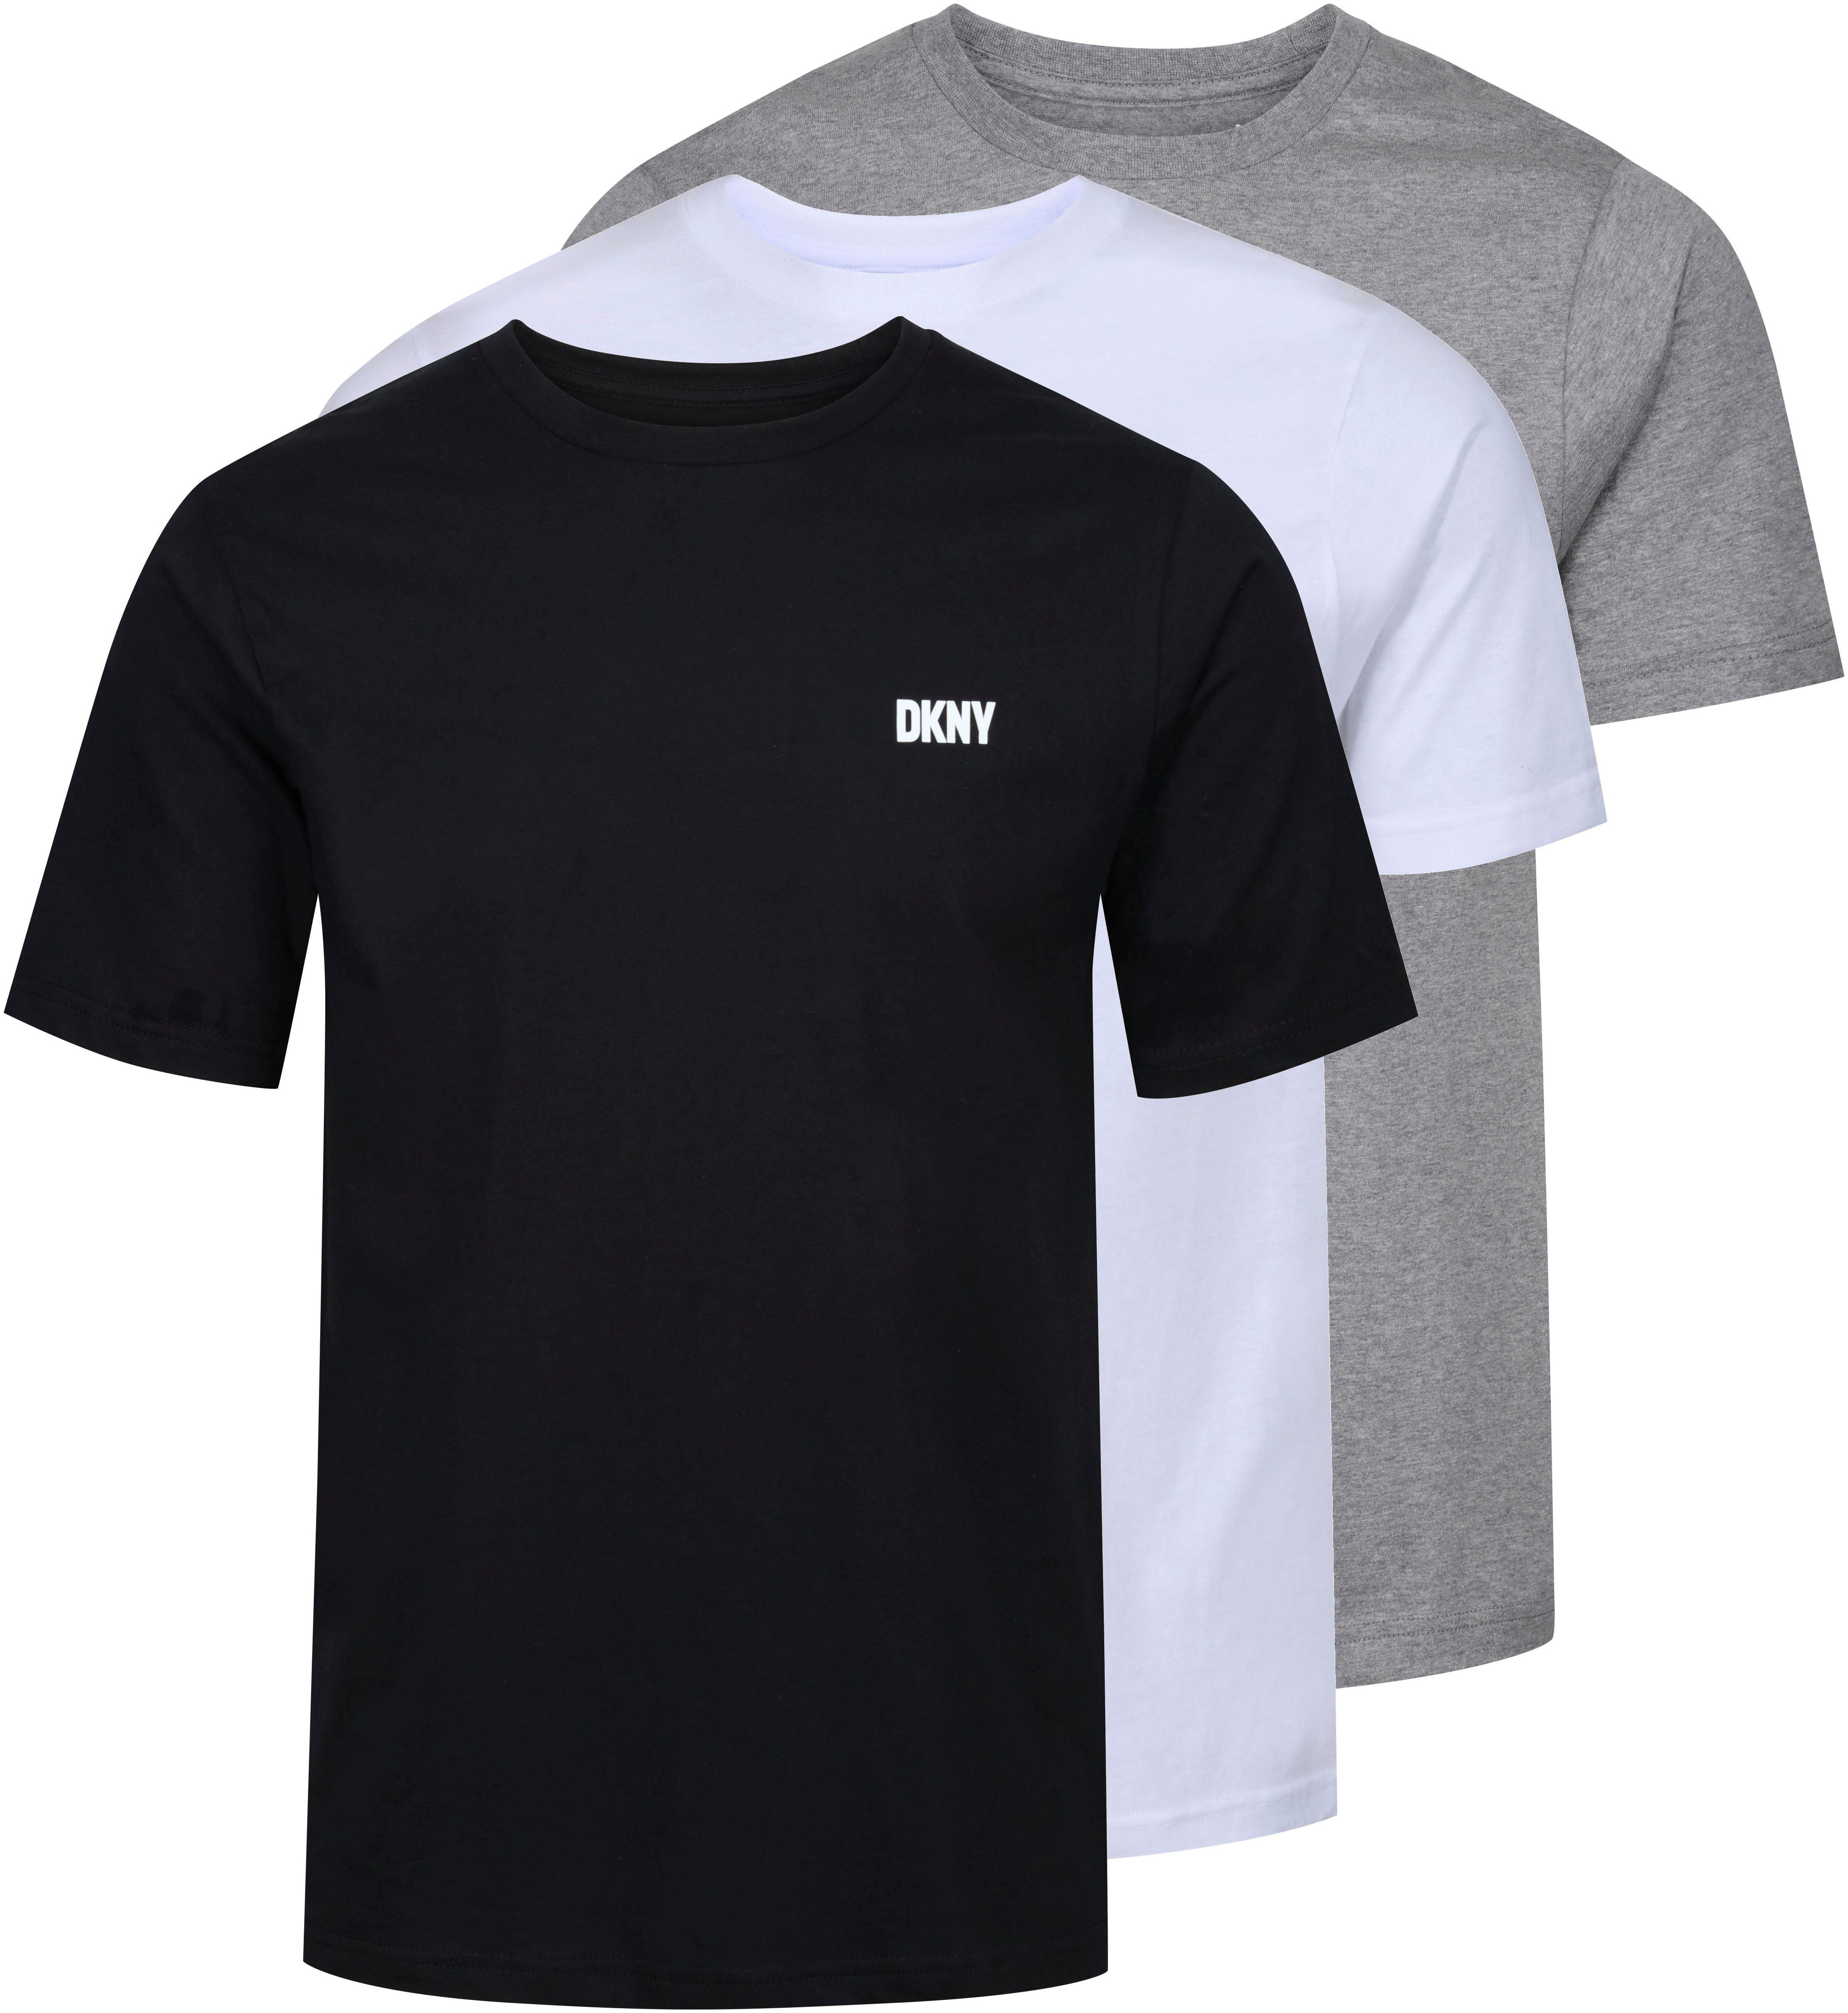 DKNY T-Shirt GIANTS black/white